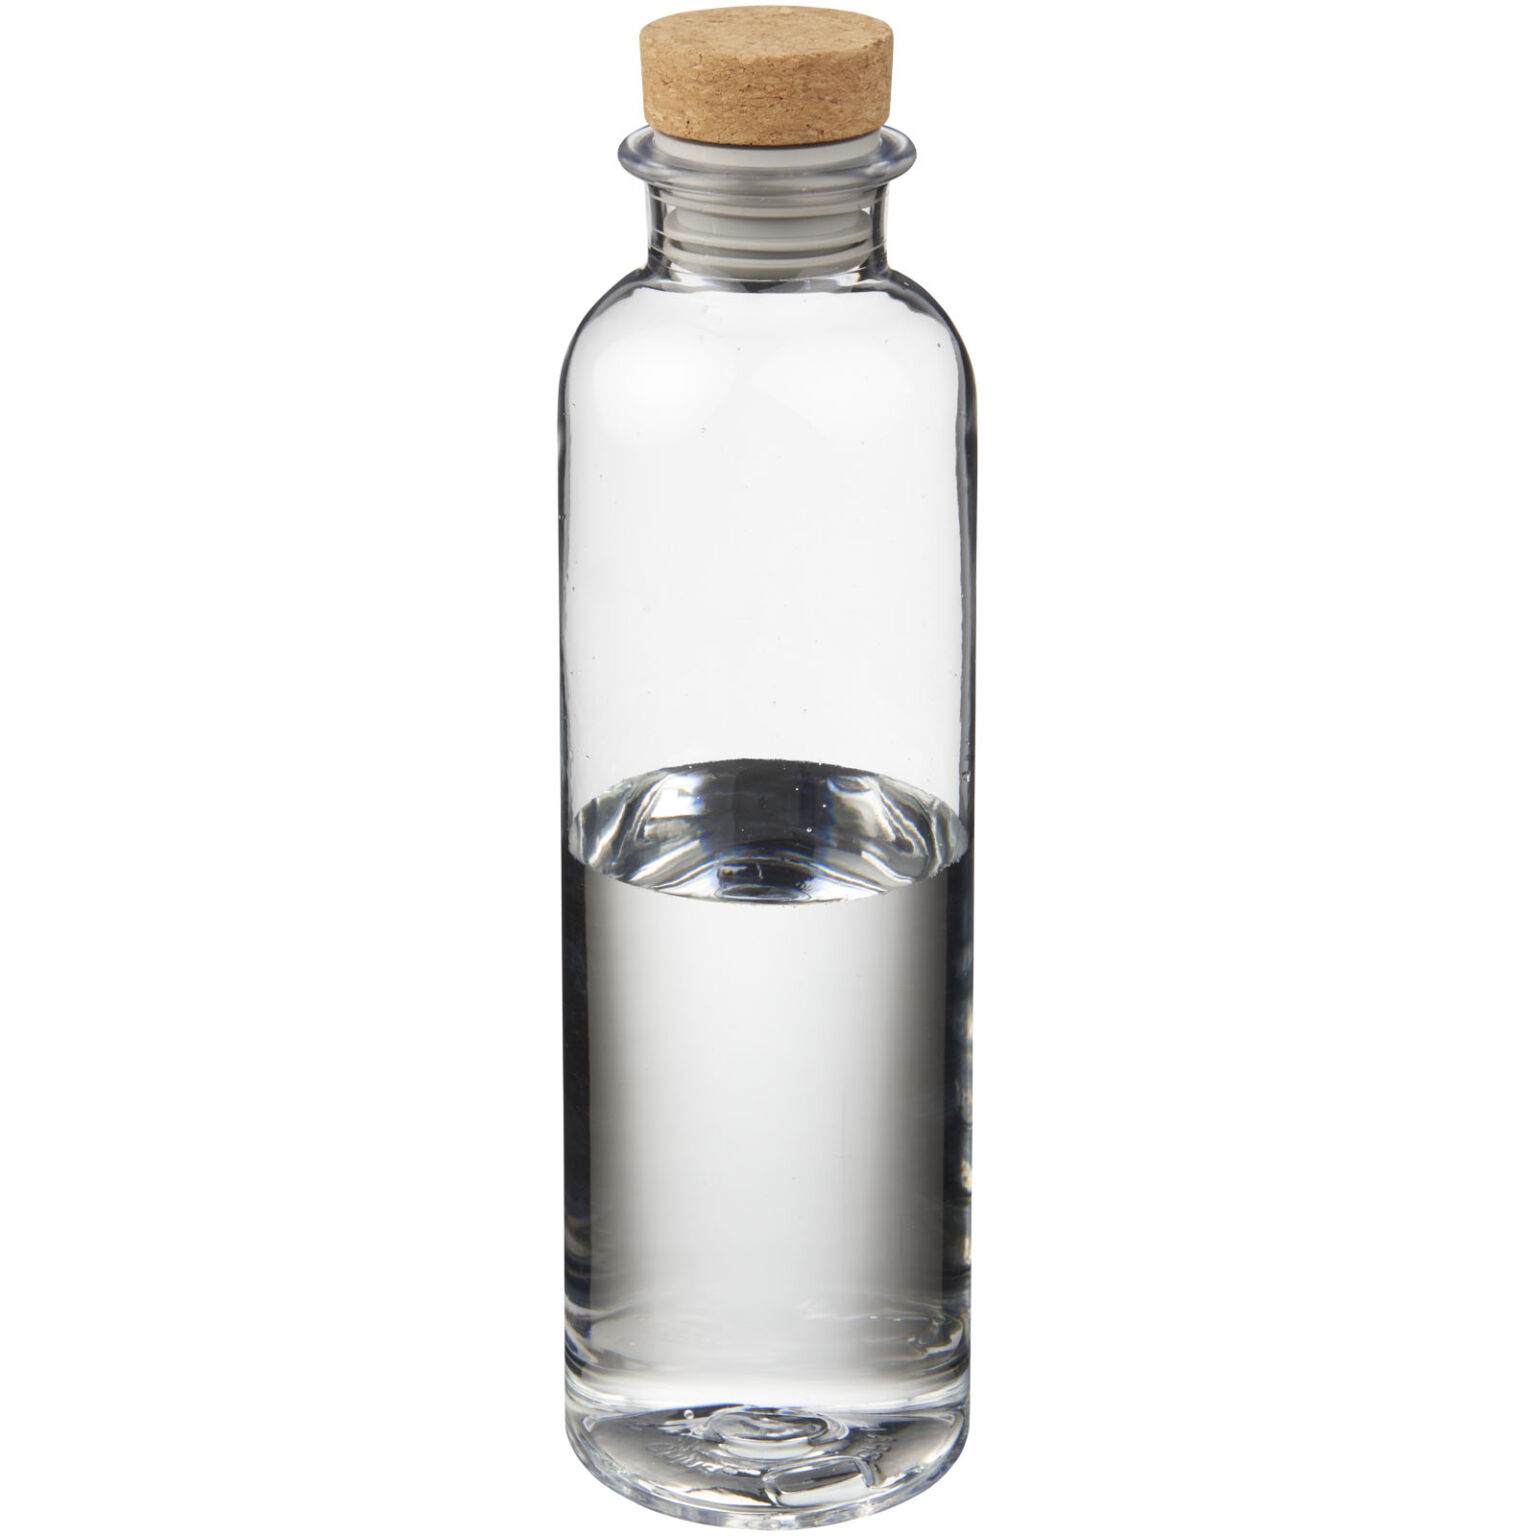 Прозрачные бутылки для воды. Стеклянная бутылка. Стеклянная бутылка для воды. Бутылка для воды прозрачная. Бутылка прозрачная стеклянная.